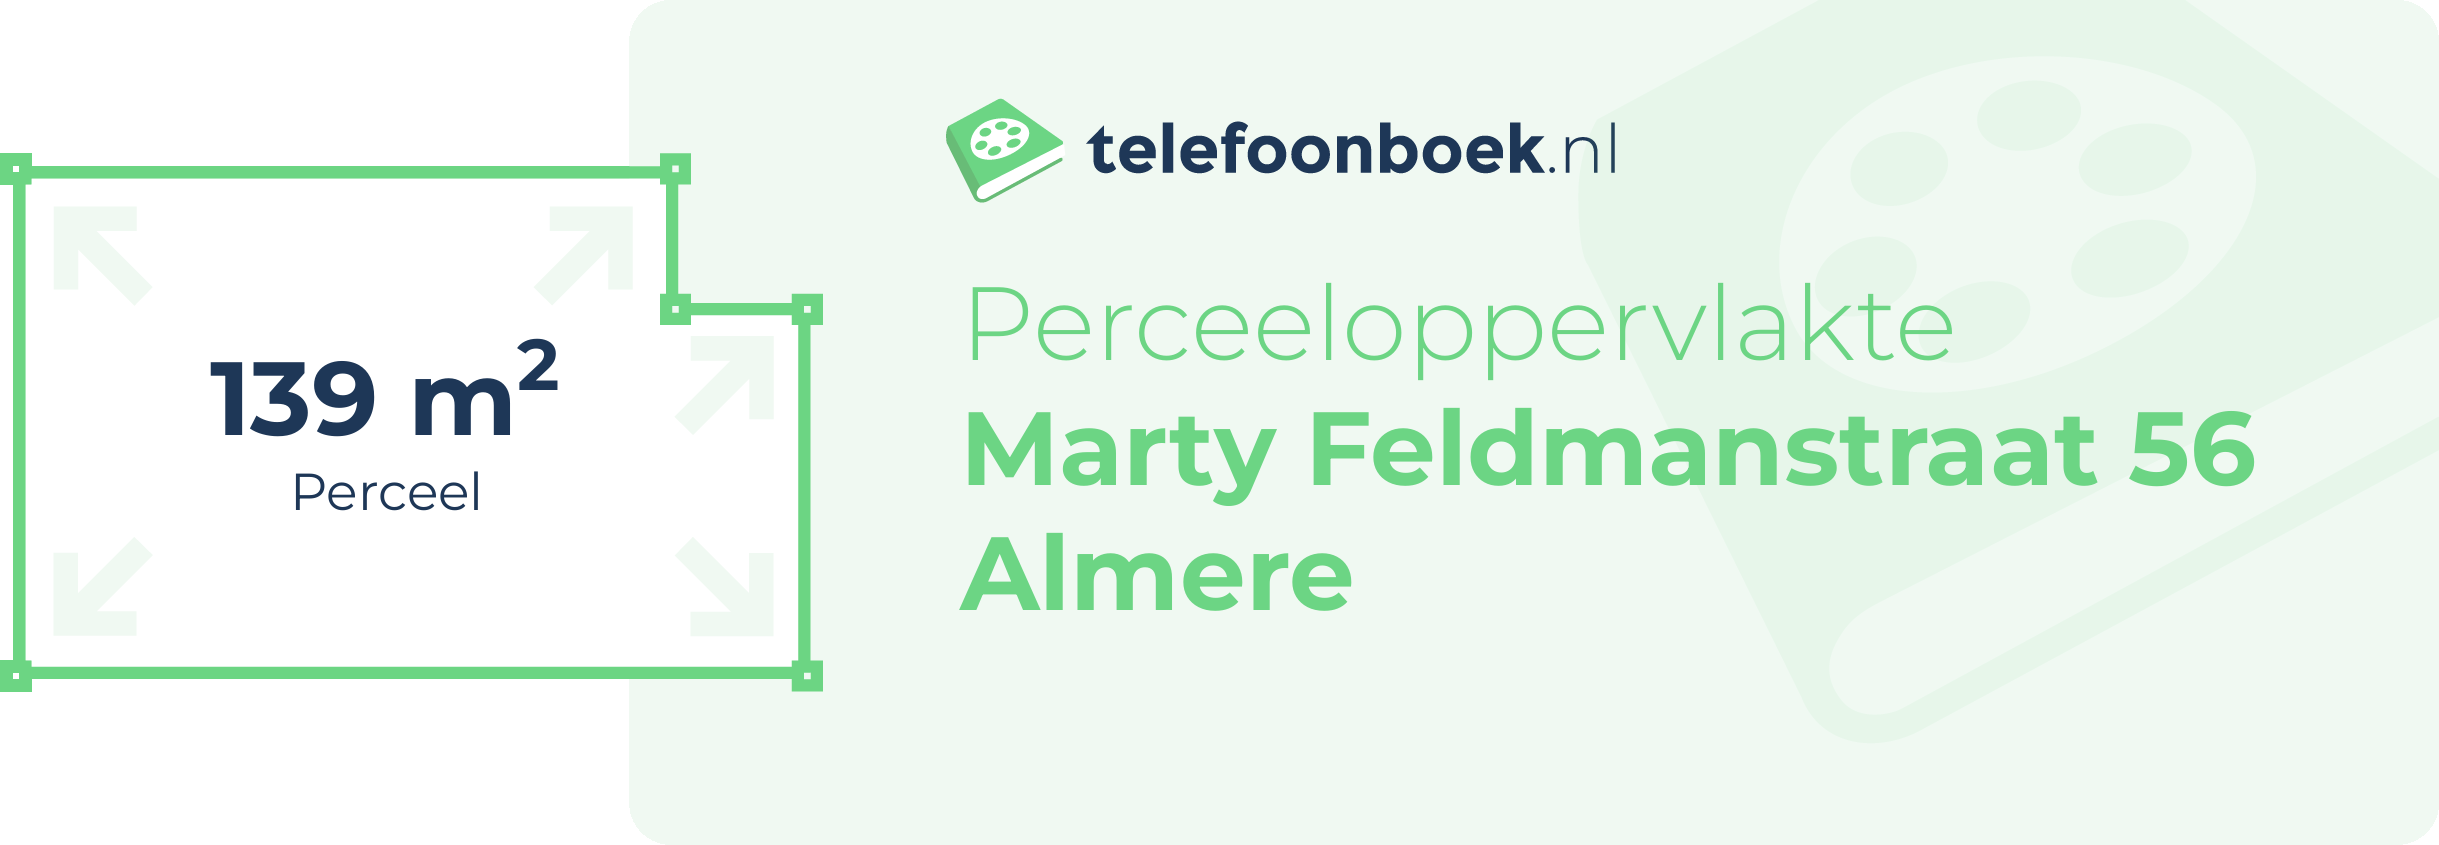 Perceeloppervlakte Marty Feldmanstraat 56 Almere